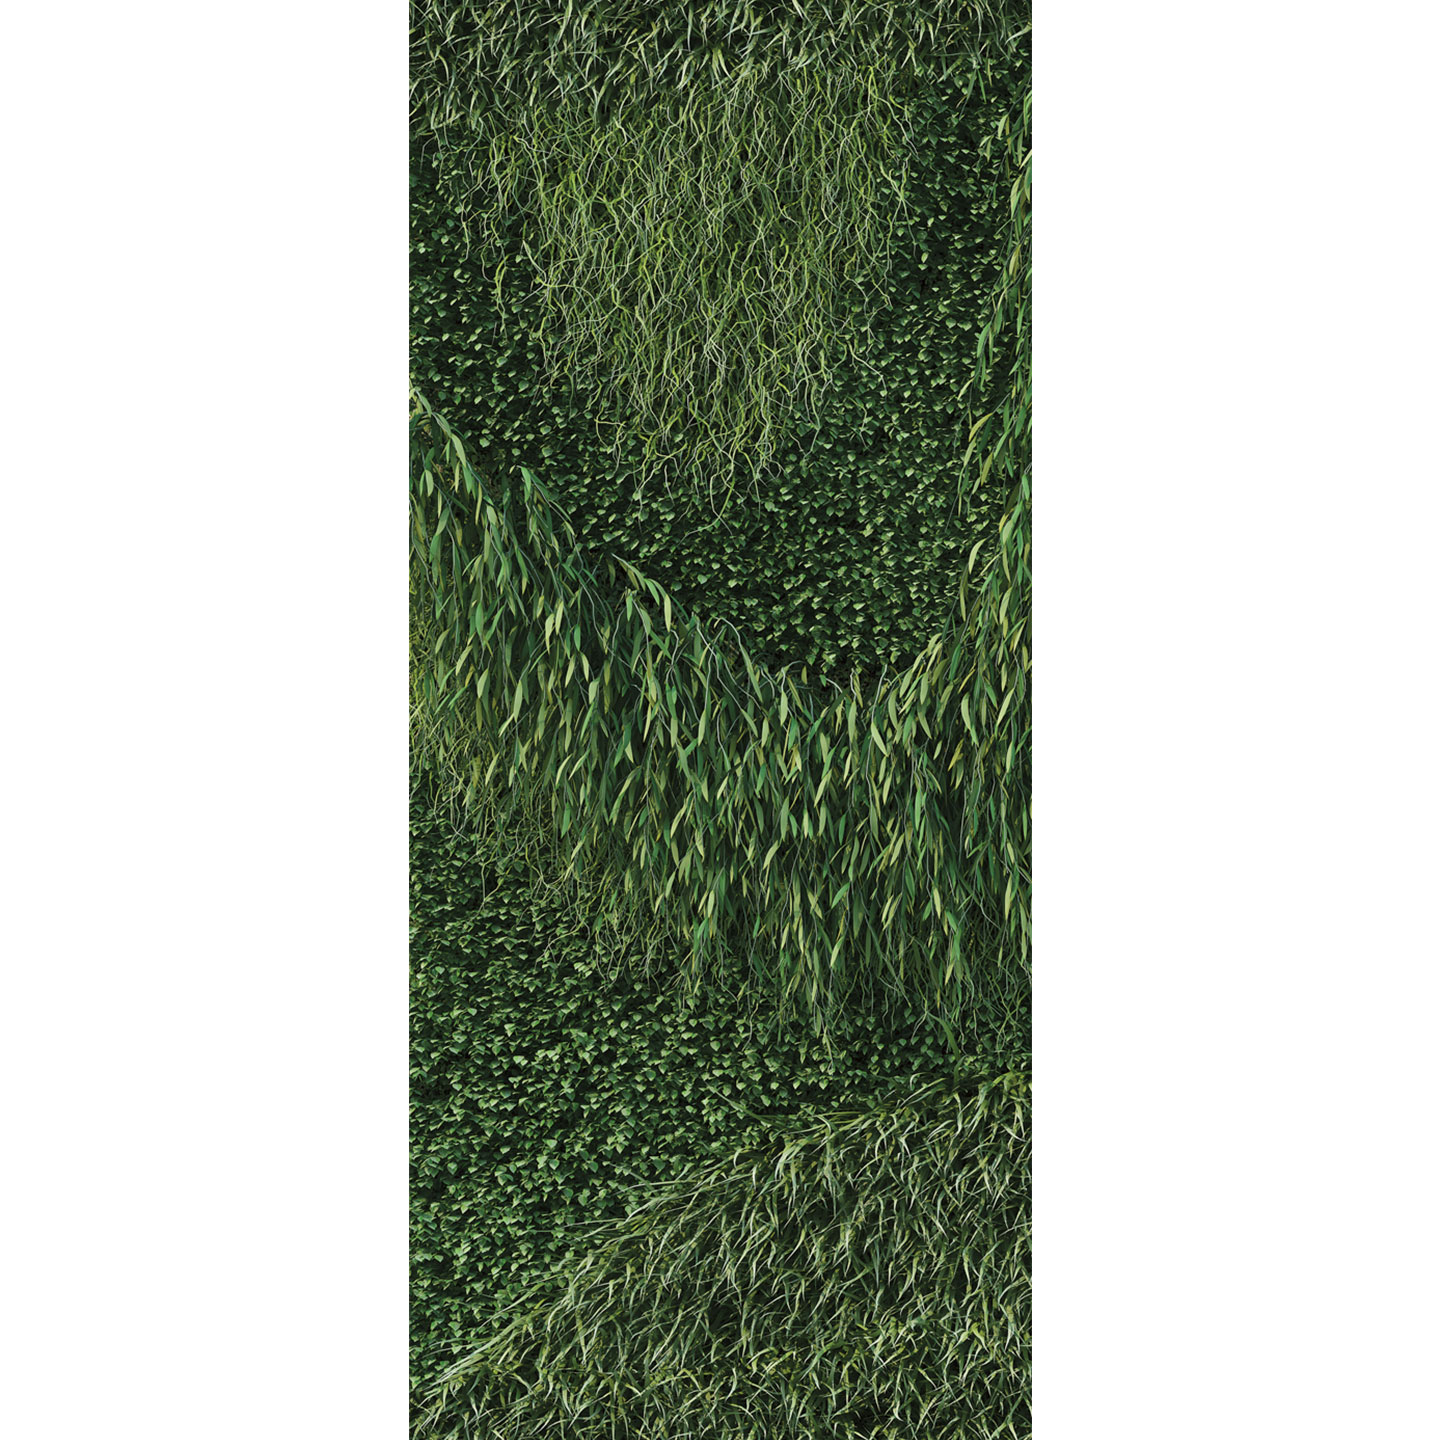 Haworth Buzziskin accessories wallpaper with green plant design